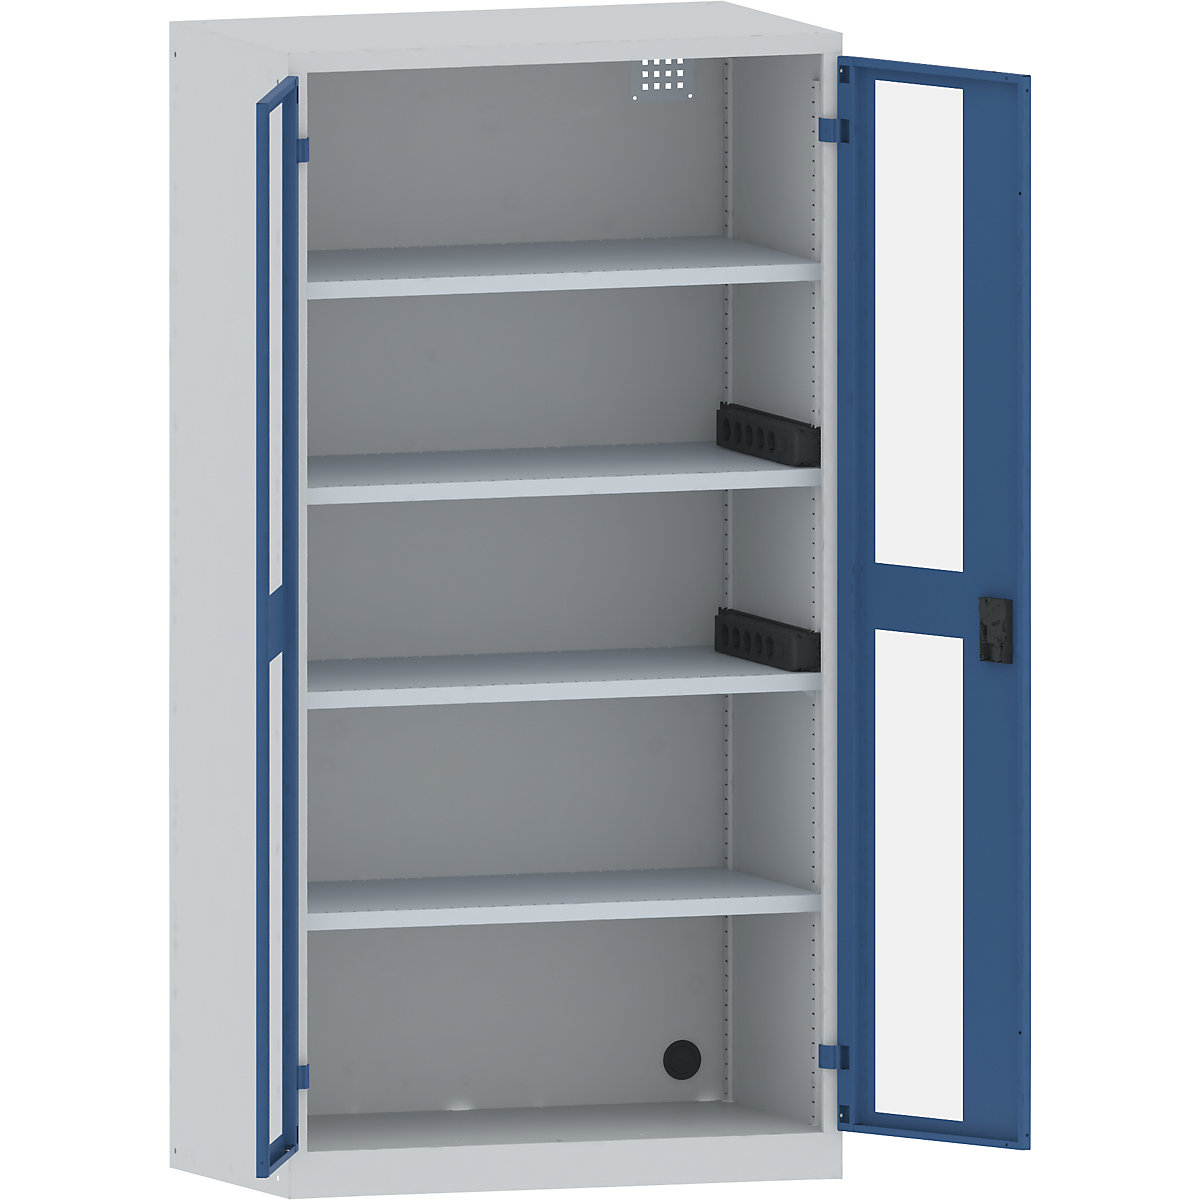 LISTA – Armario cargador de baterías, 4 baldas, puertas con ventanilla, 2 regletas de enchufes laterales, gris / azul